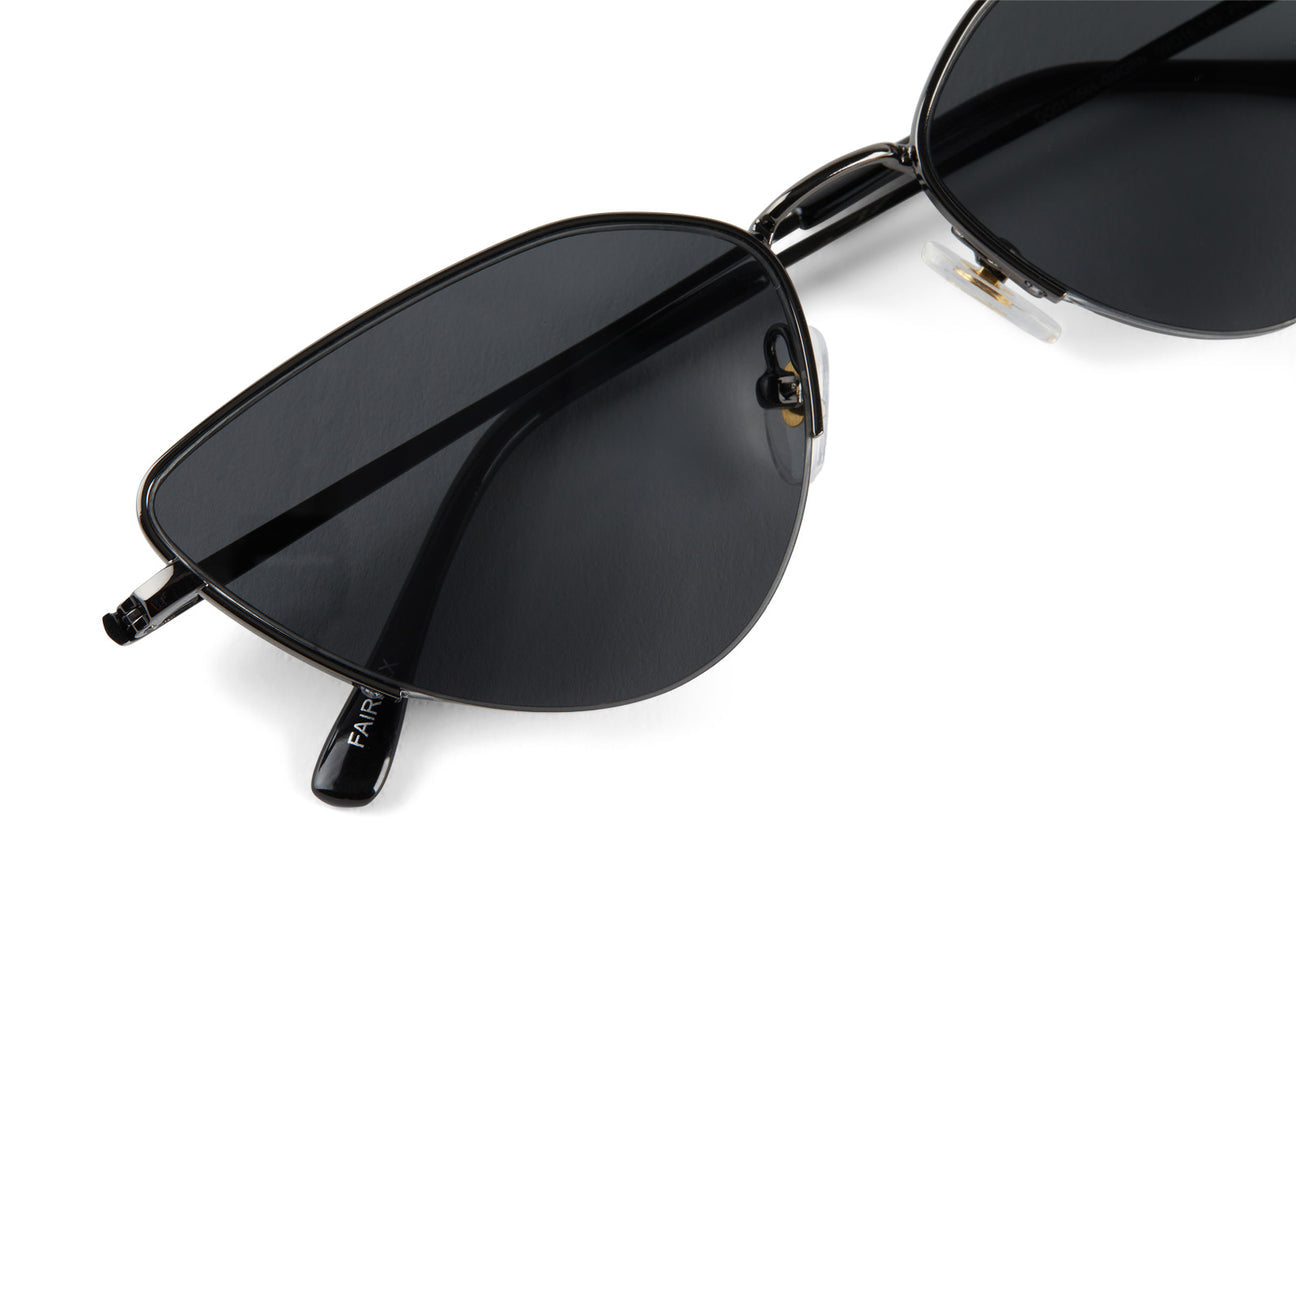 Fairfax Gunmetal+Solid Grey Sunglasses